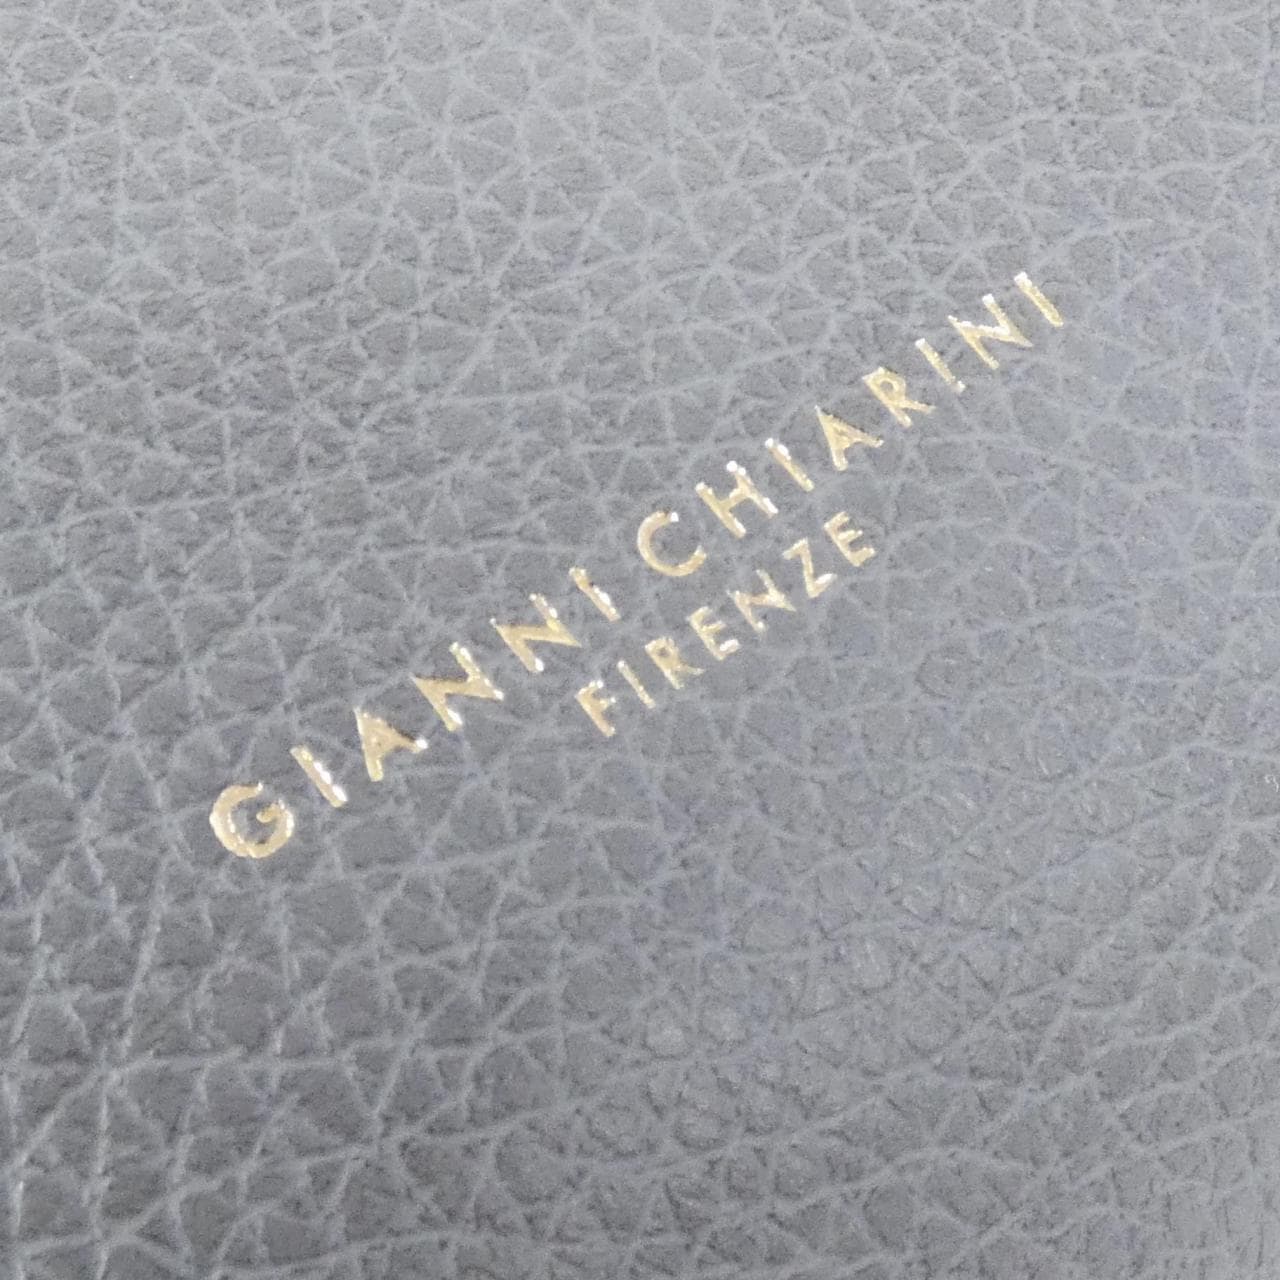 [BRAND NEW] Gianni Chiarini Megan 4191 Bag